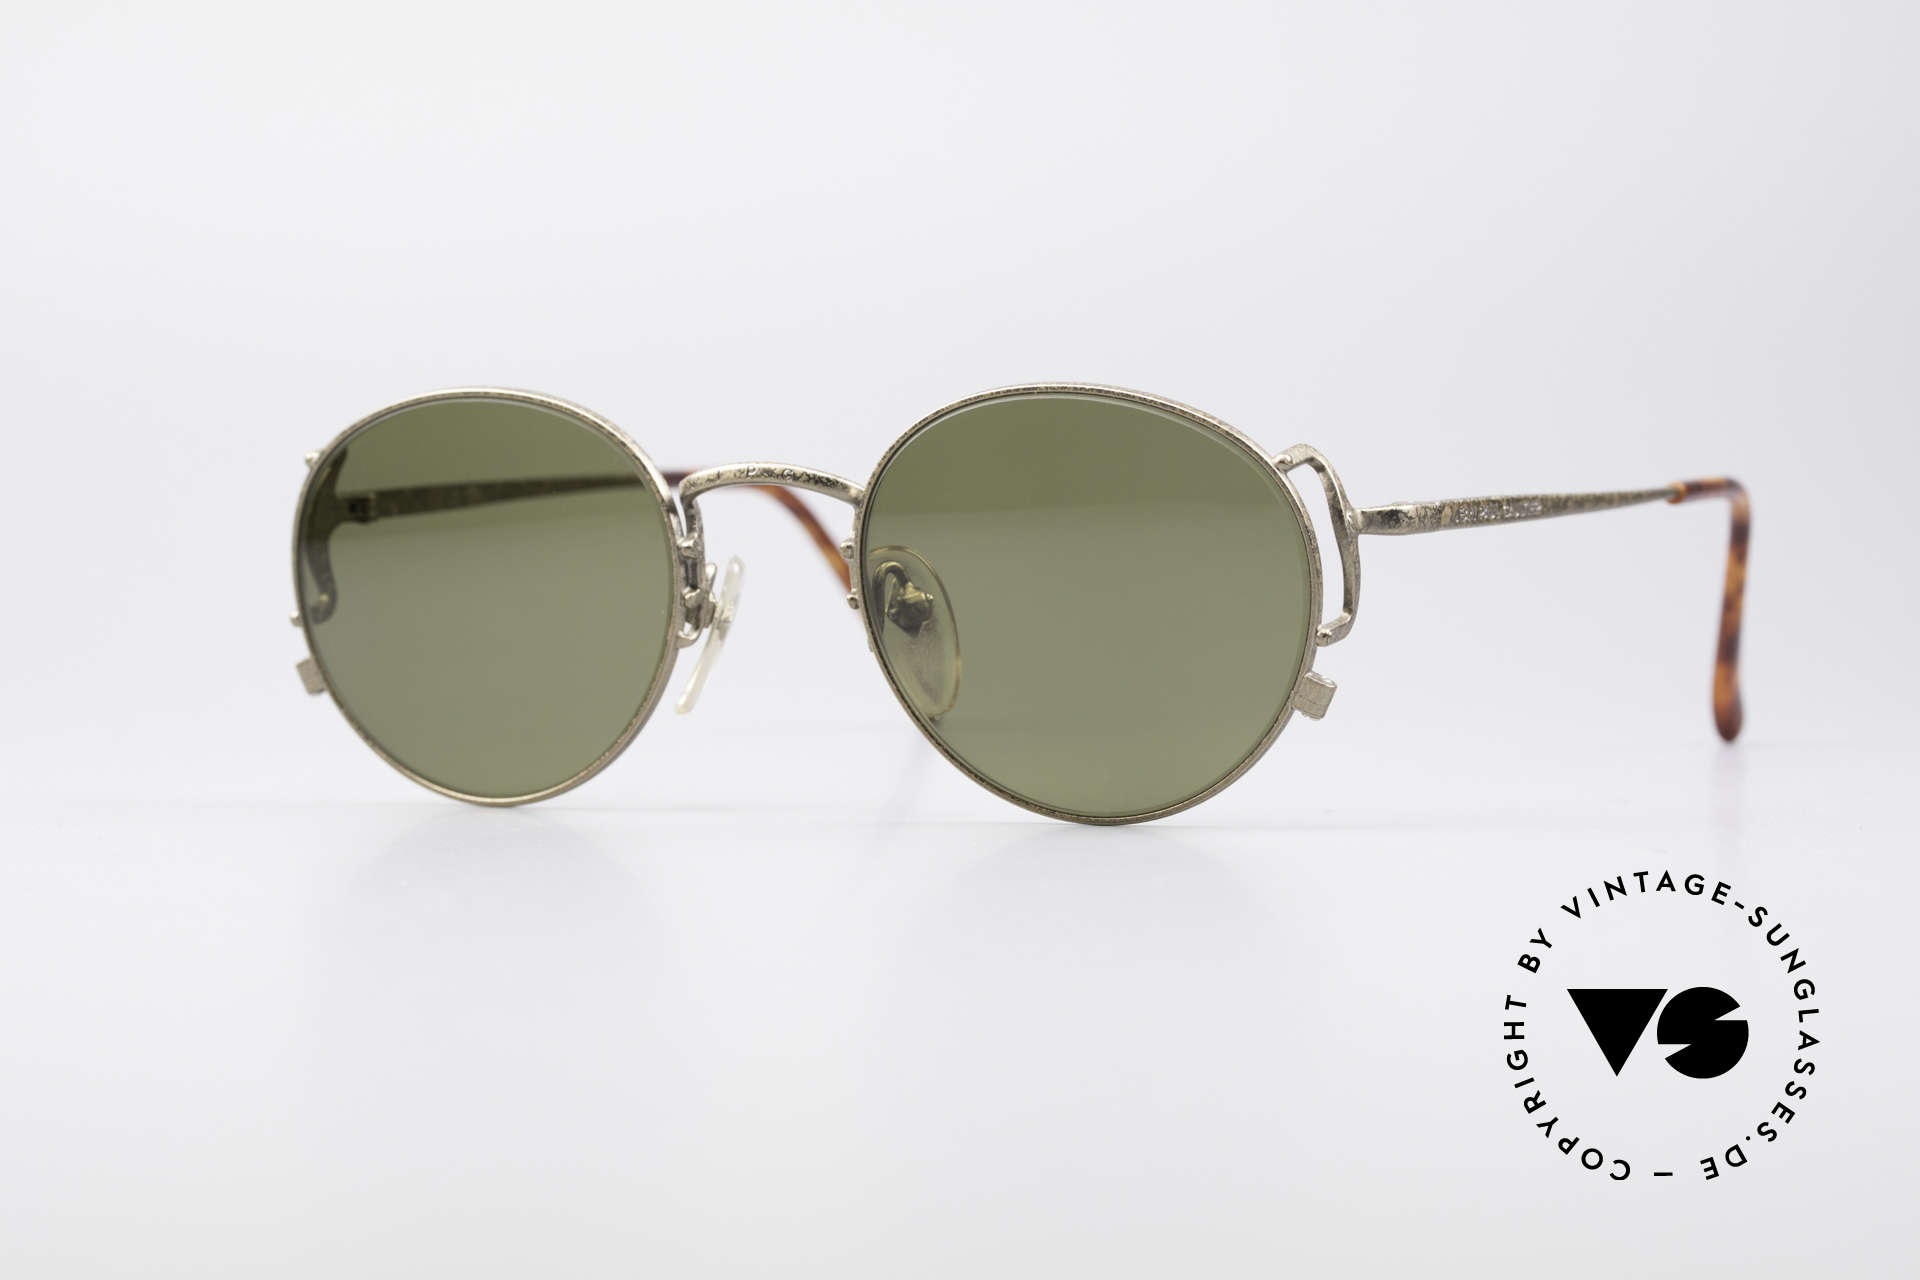 Jean Paul Gaultier 55-3178 Polarized Sun Lenses, noble Jean Paul GAULTIER 90's designer shades, Made for Men and Women